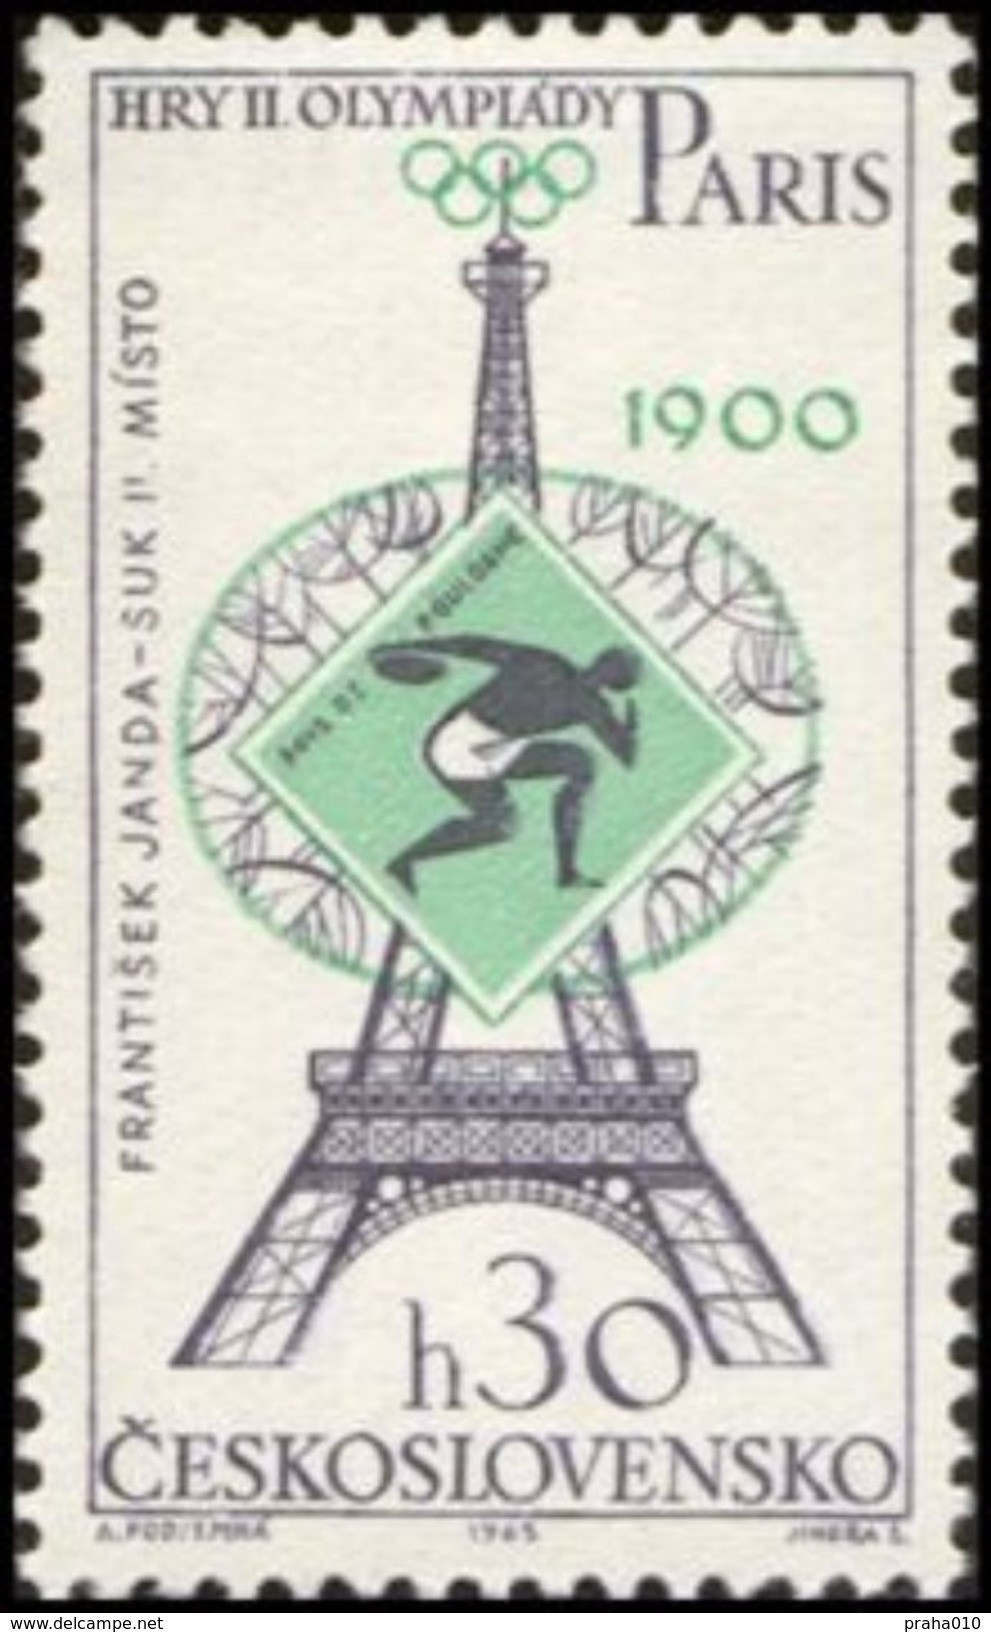 Czechoslovakia / Stamps (1965) 1429: Olympic Games 1900 Paris, F. Janda-Suk (discus Throw); Painter: Anna Podzemna - Estate 1900: Parigi